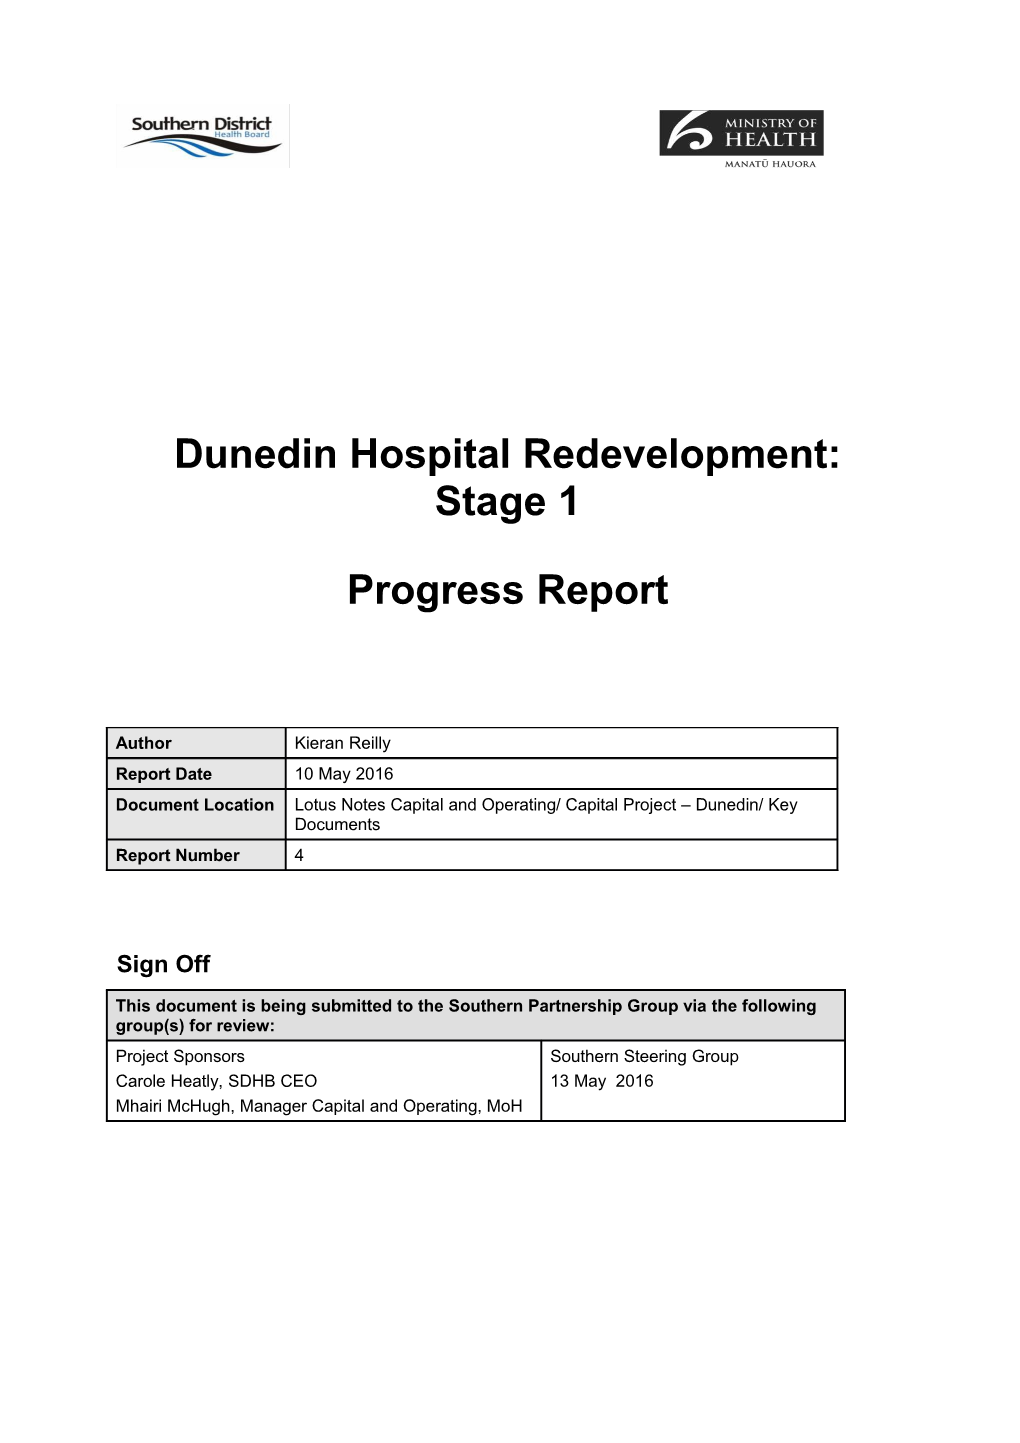 Dunedin Hospital Redevelopment Progress Report 9May 2016